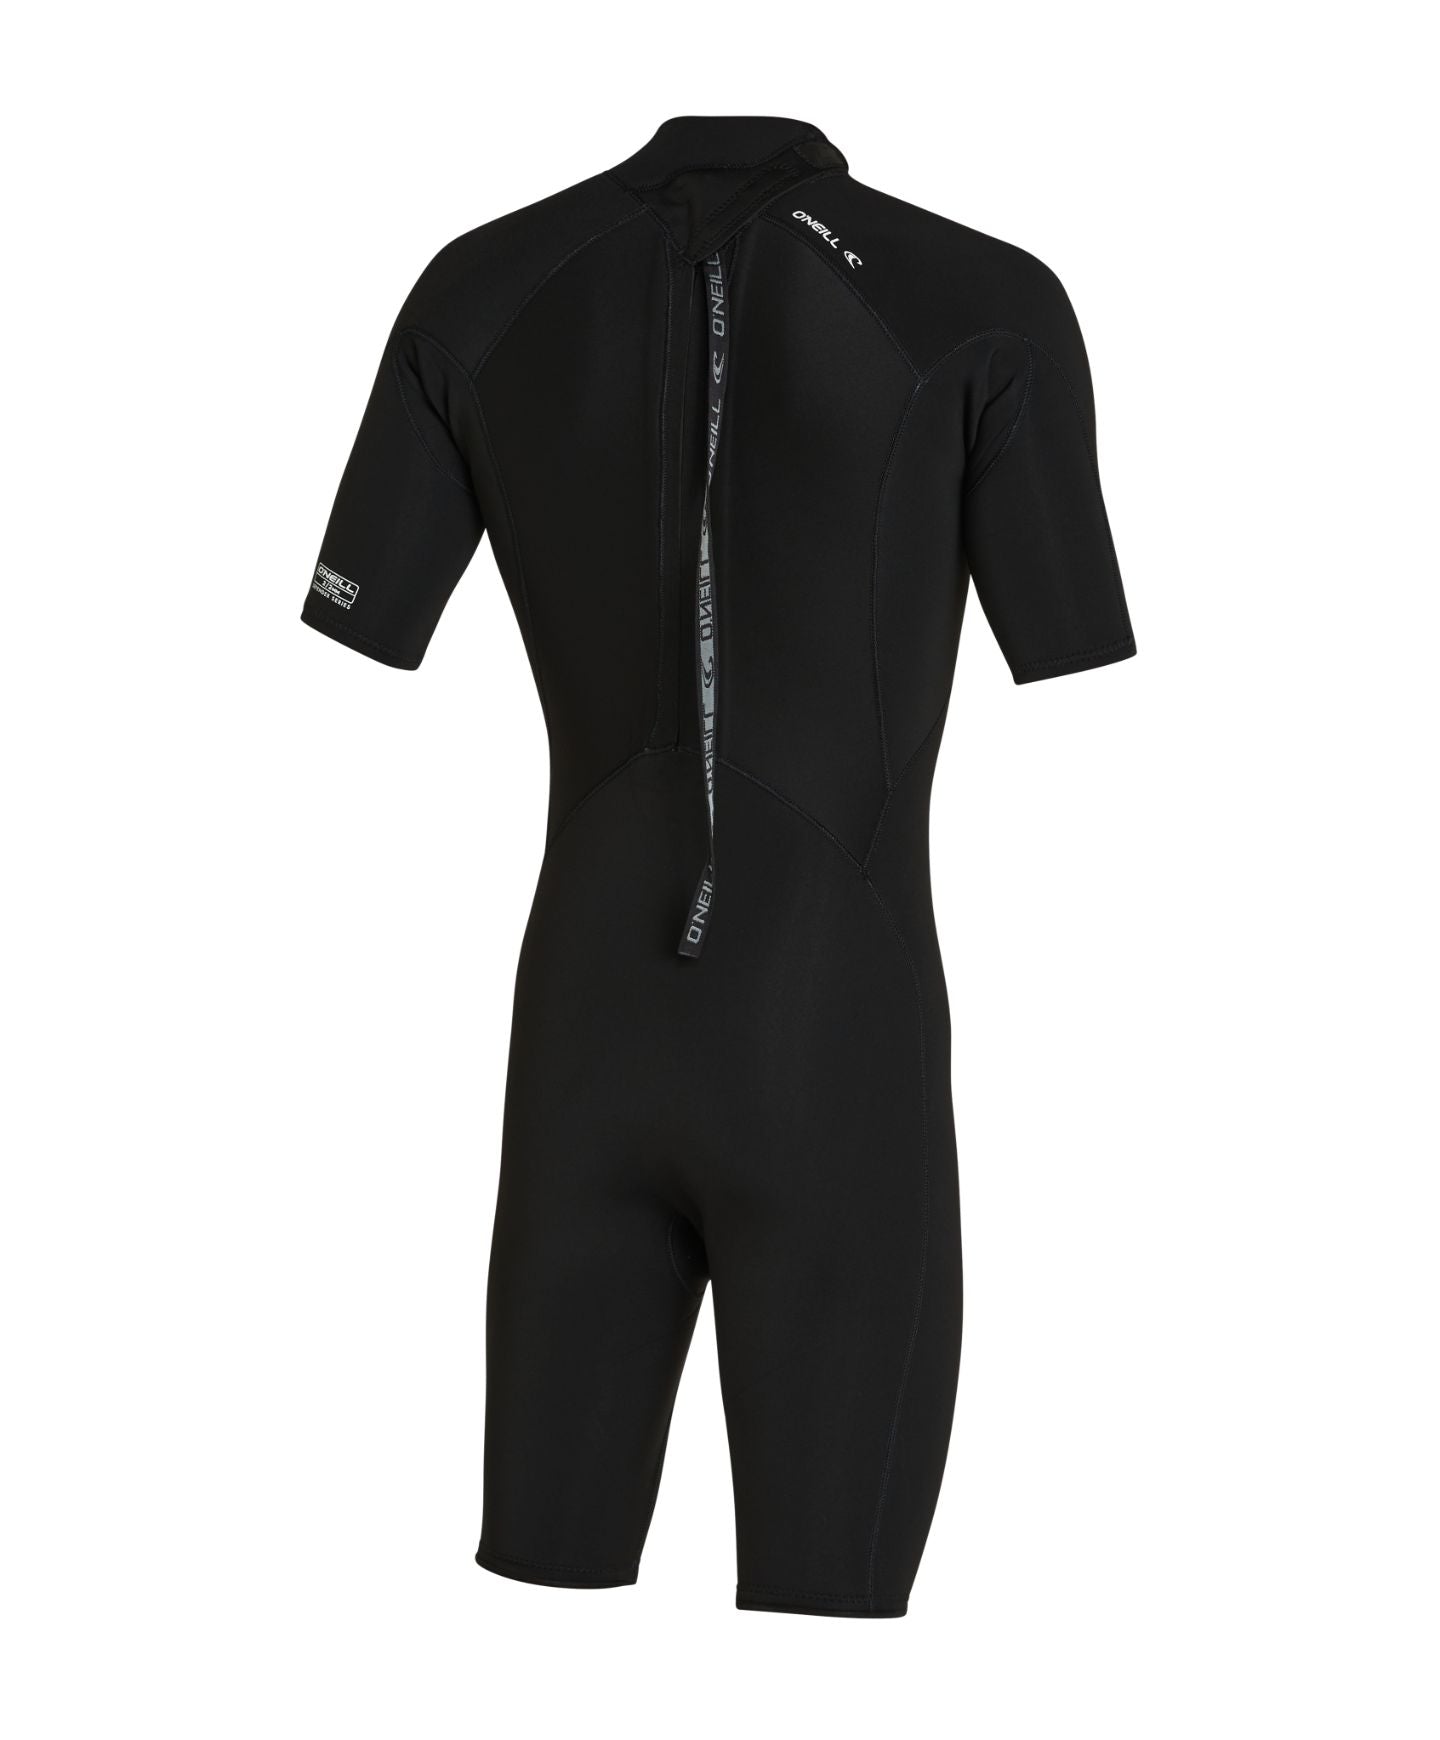 Defender Back Zip Short Sleeve Spring Suit 2mm Wetsuit - Black